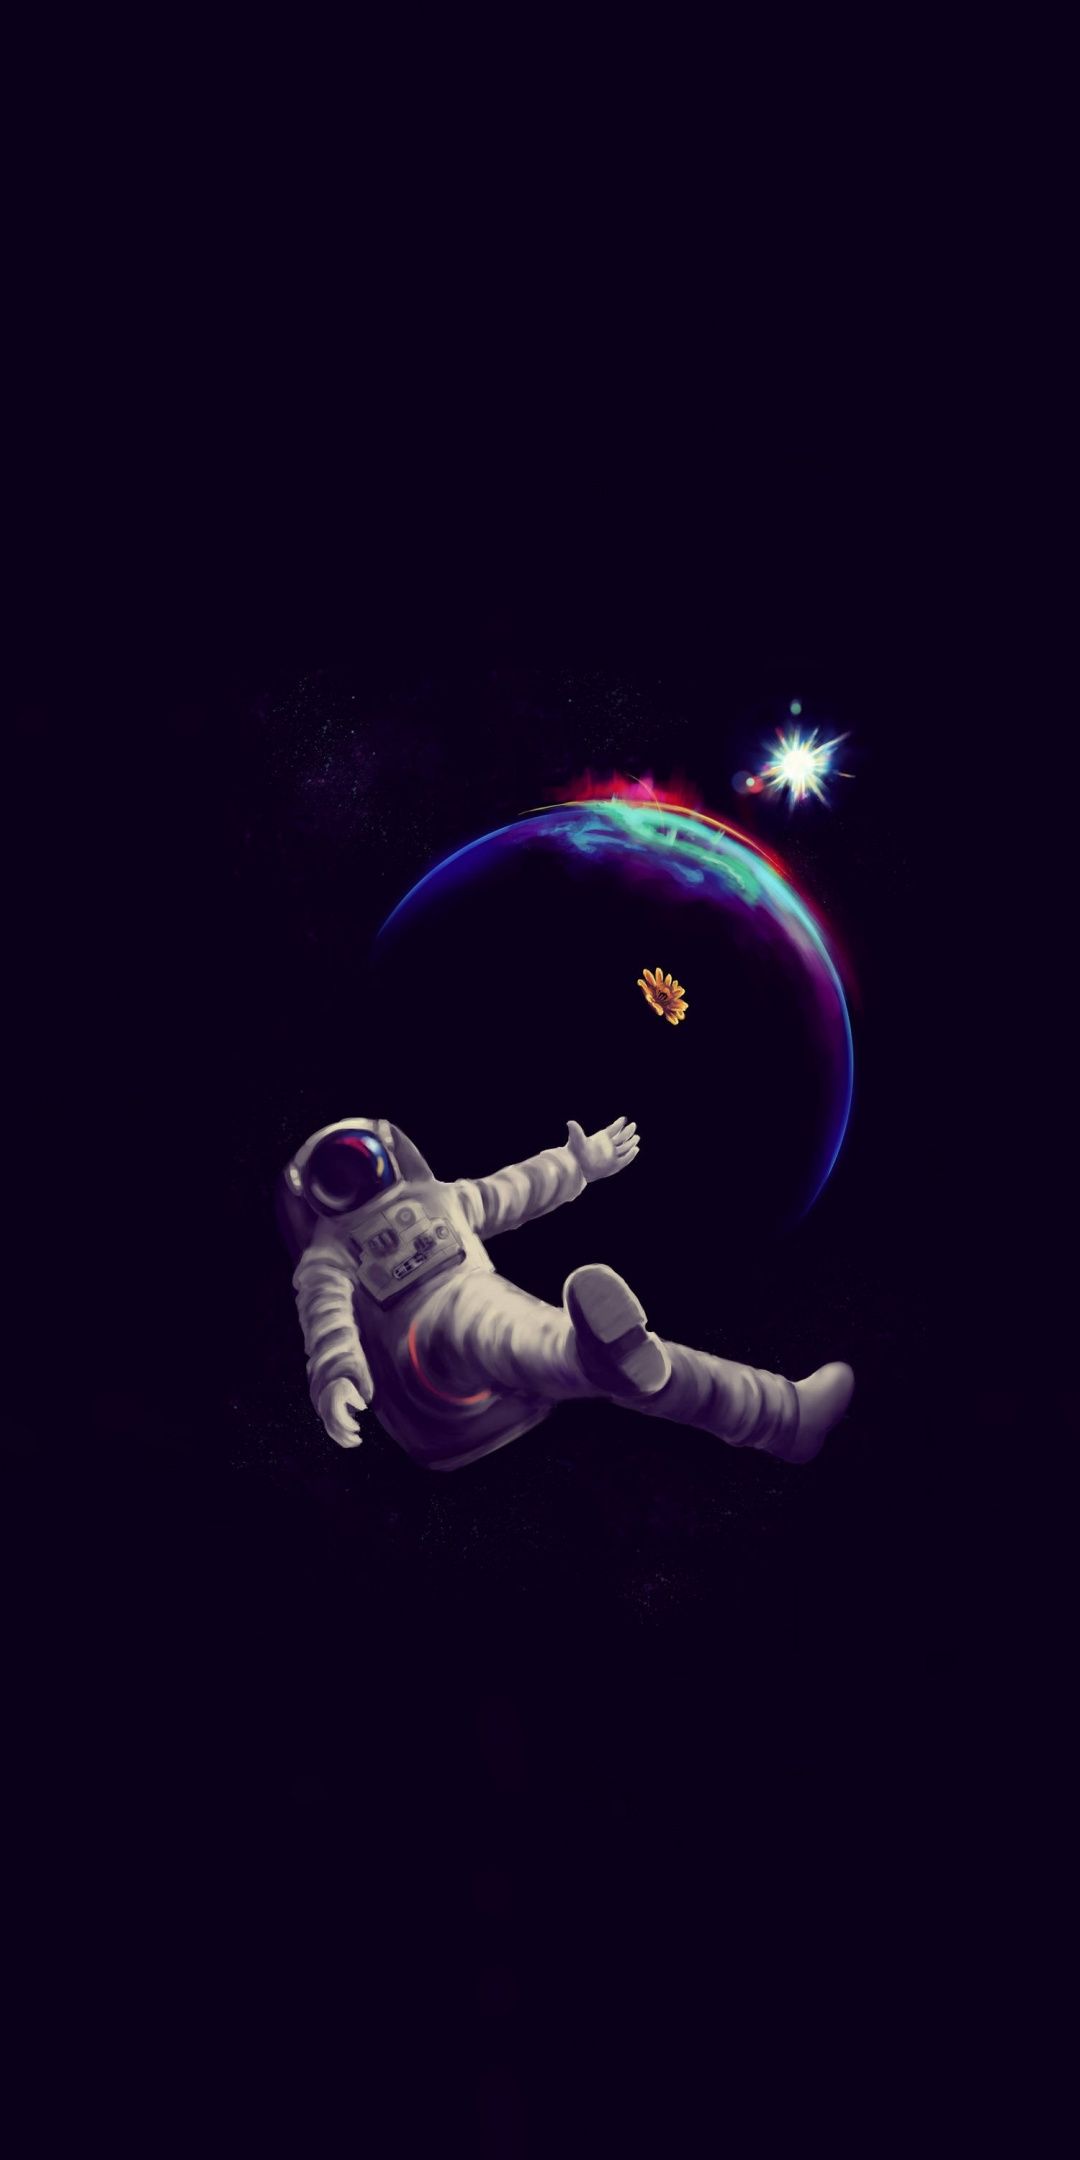 Planet, astronaut, dark, minimal, 1080x2160 wallpaper. Chill